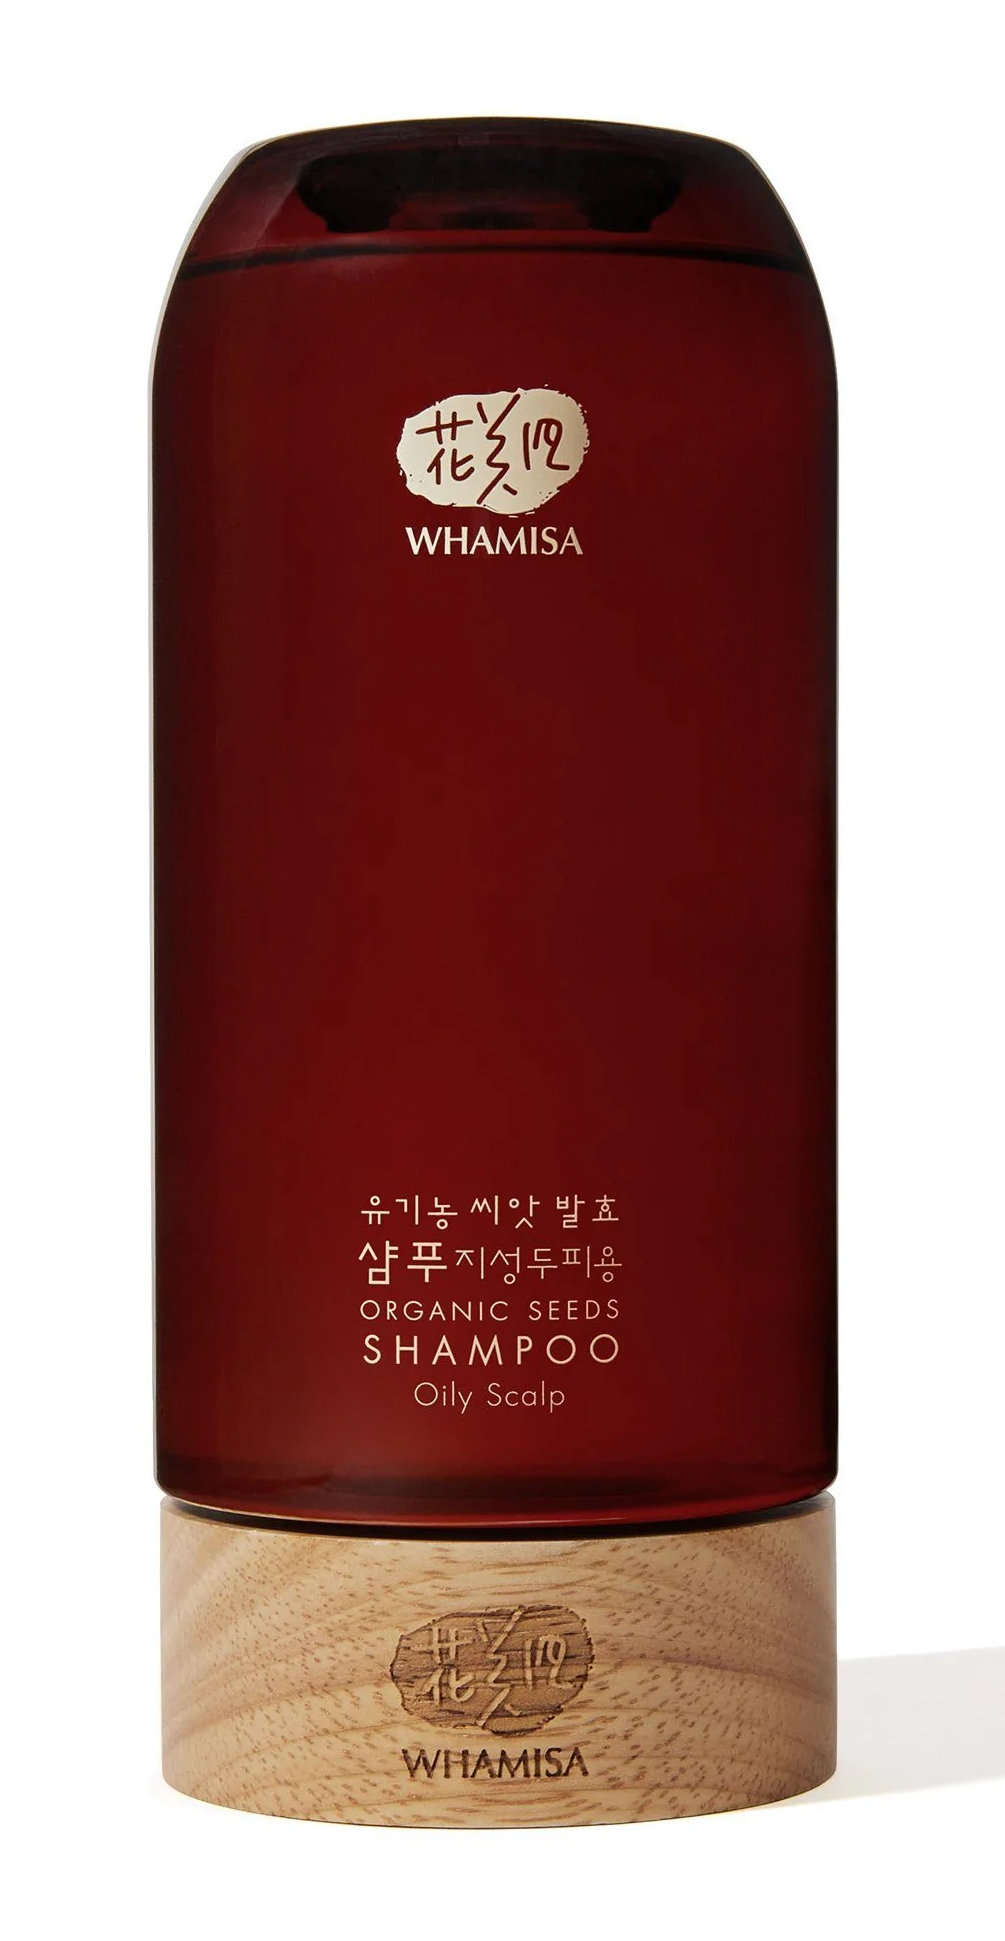 Whamisa Organic Seeds Shampoo Oily Scalp